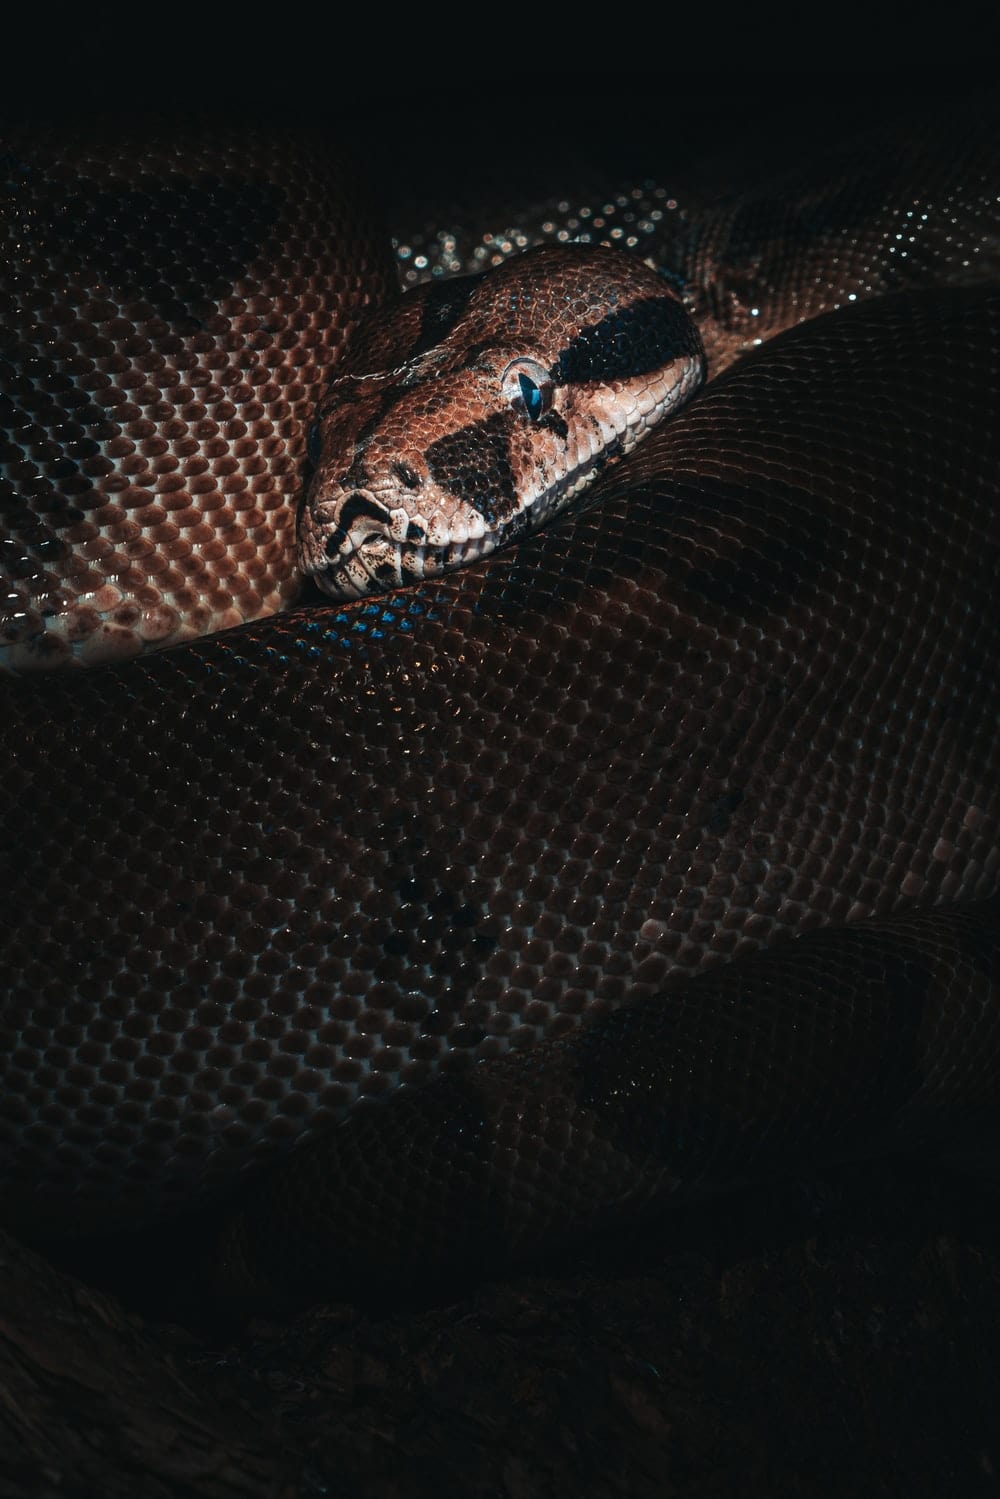 Cross Stitch | Anaconda - Brown And Black Snake Skin - Cross Stitched